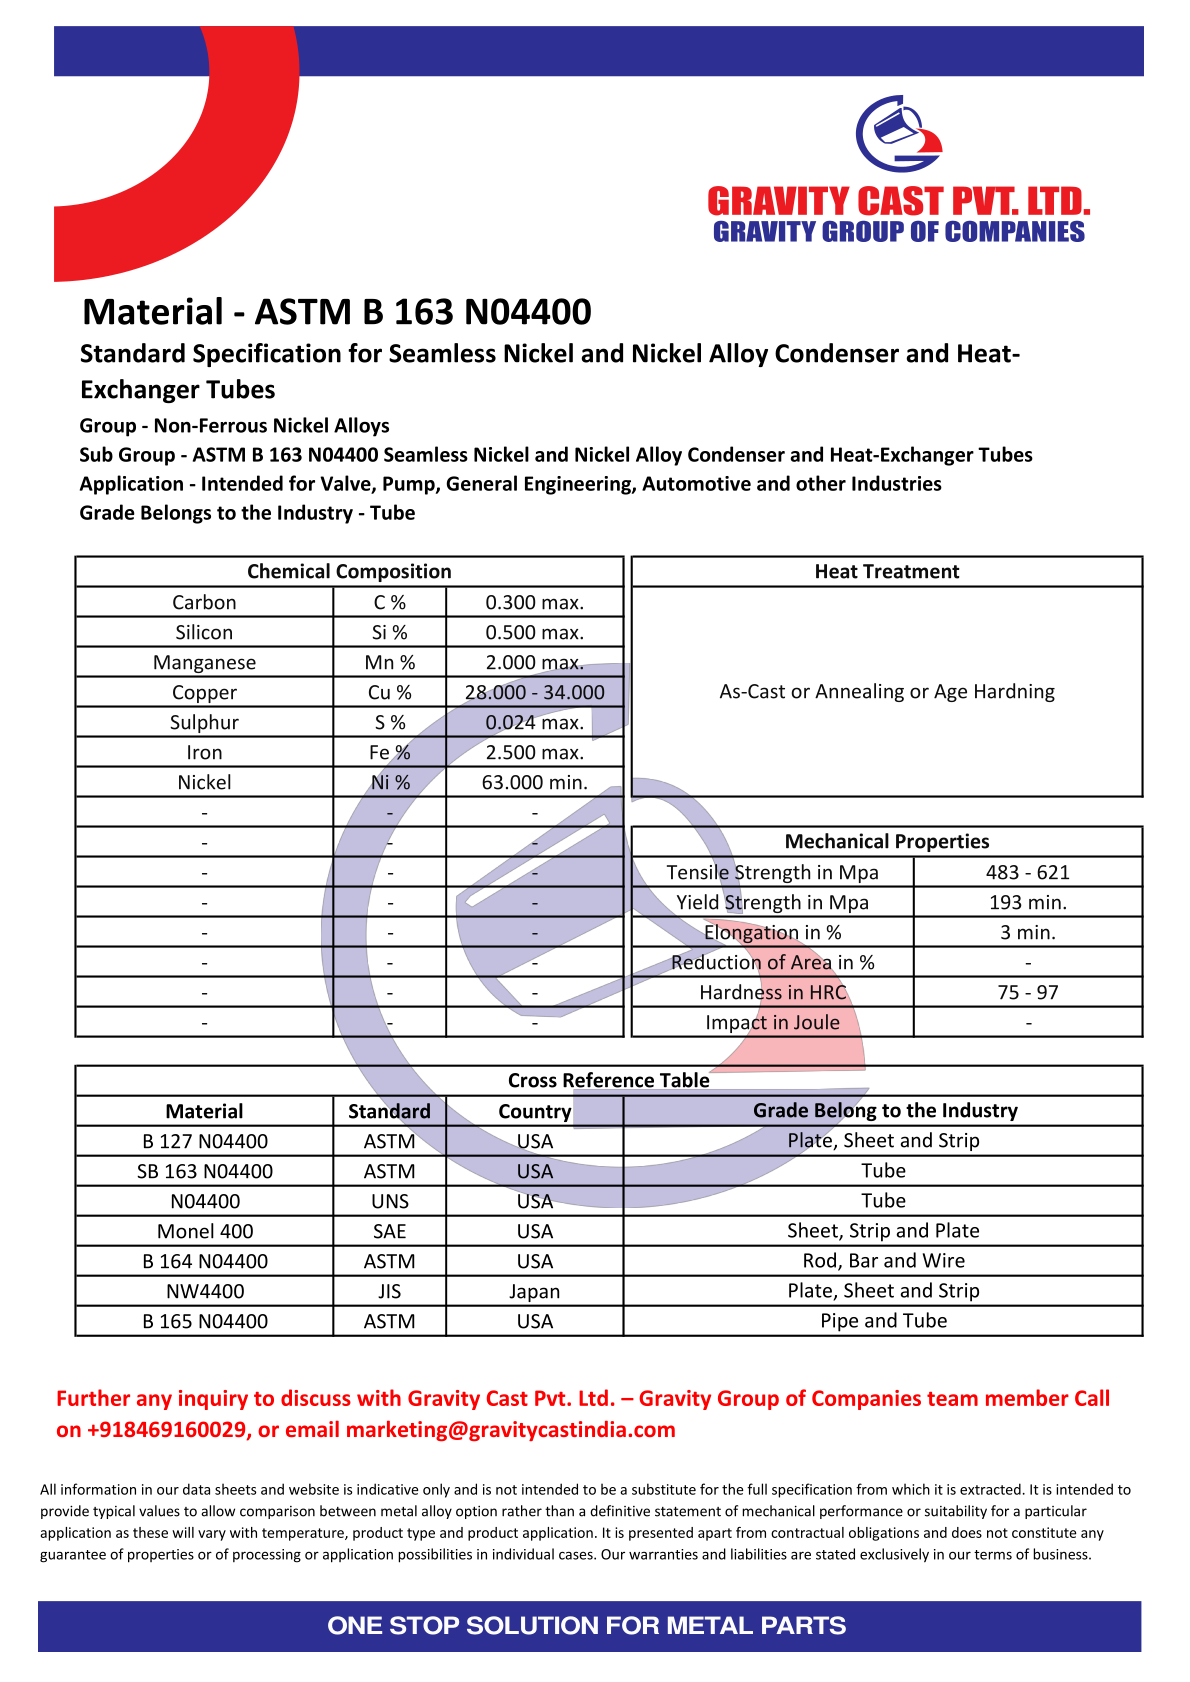 ASTM B 163 N04400.pdf